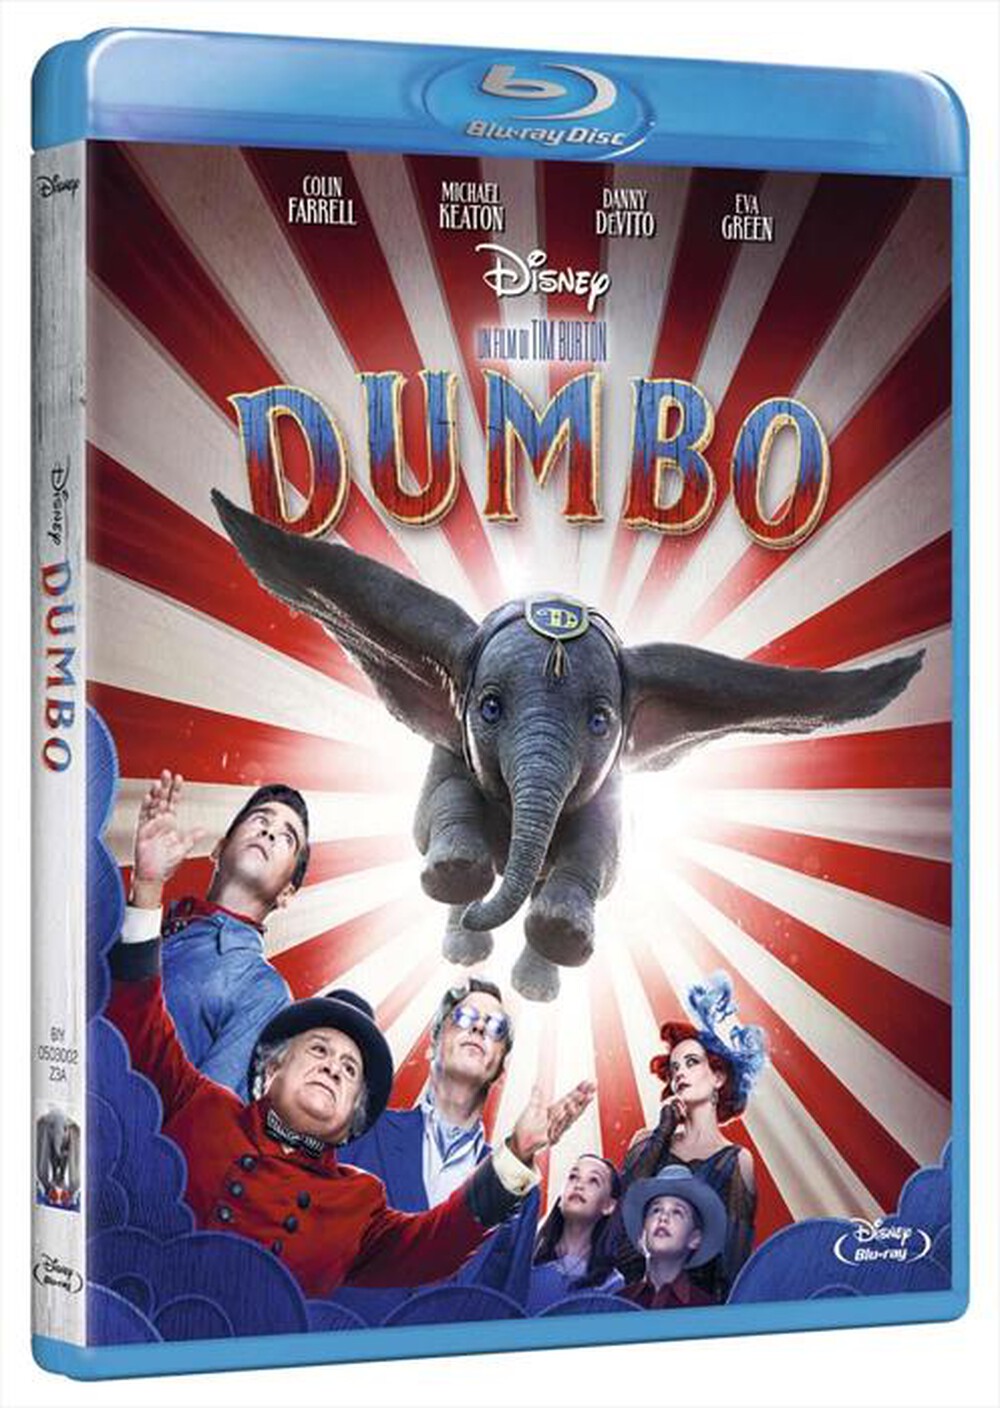 "WALT DISNEY - Dumbo (Live Action)"